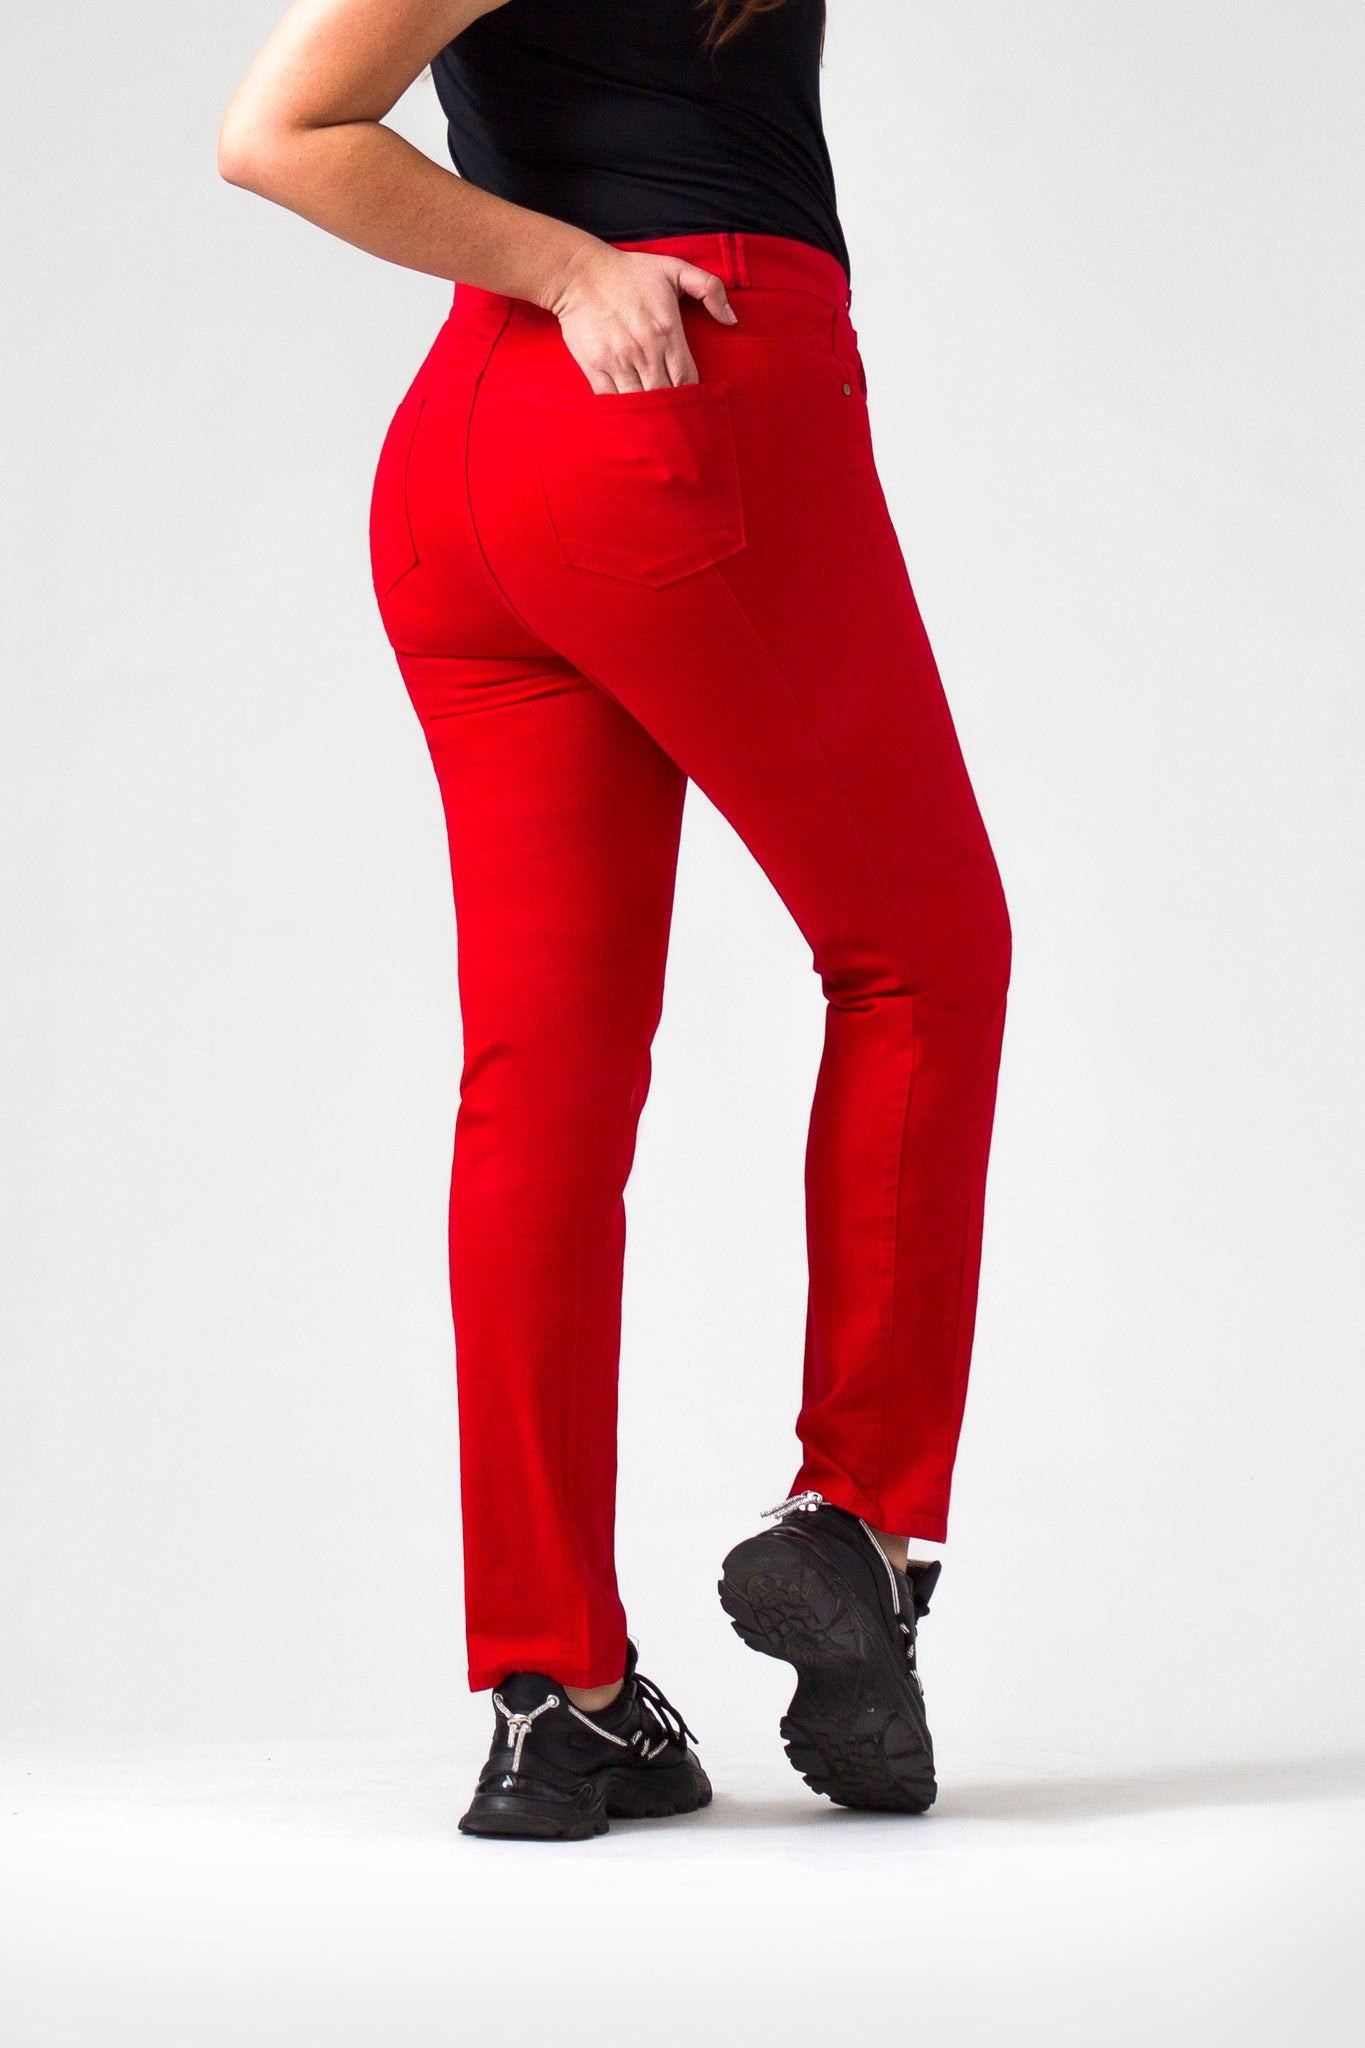 OHPOMP!® Curvy Cintura Alta Tubo Rojo T027